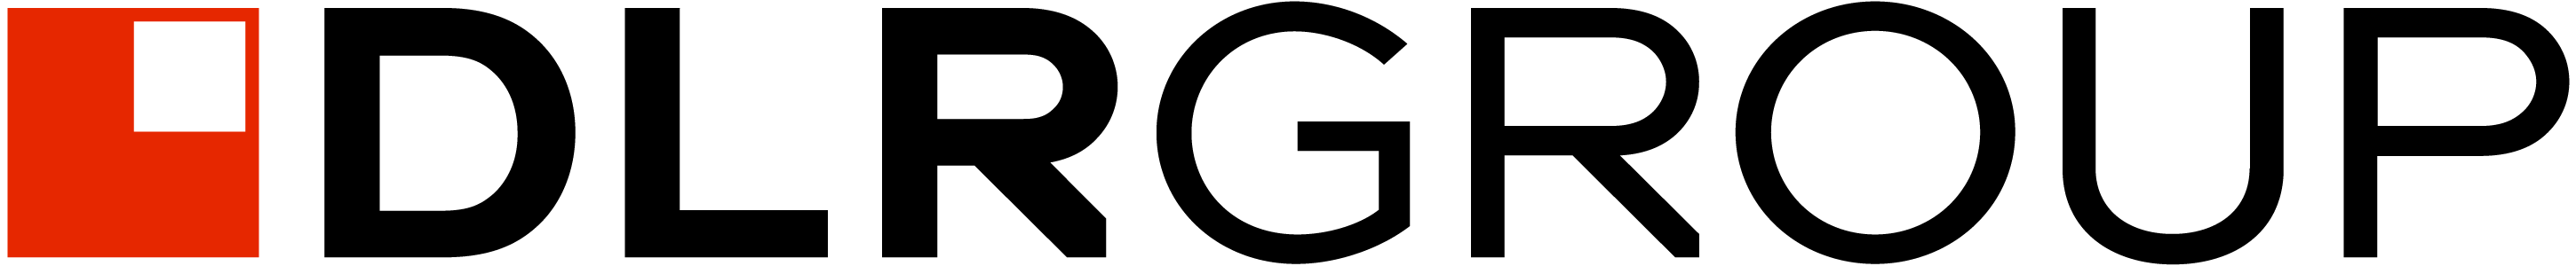 DLR Group logo